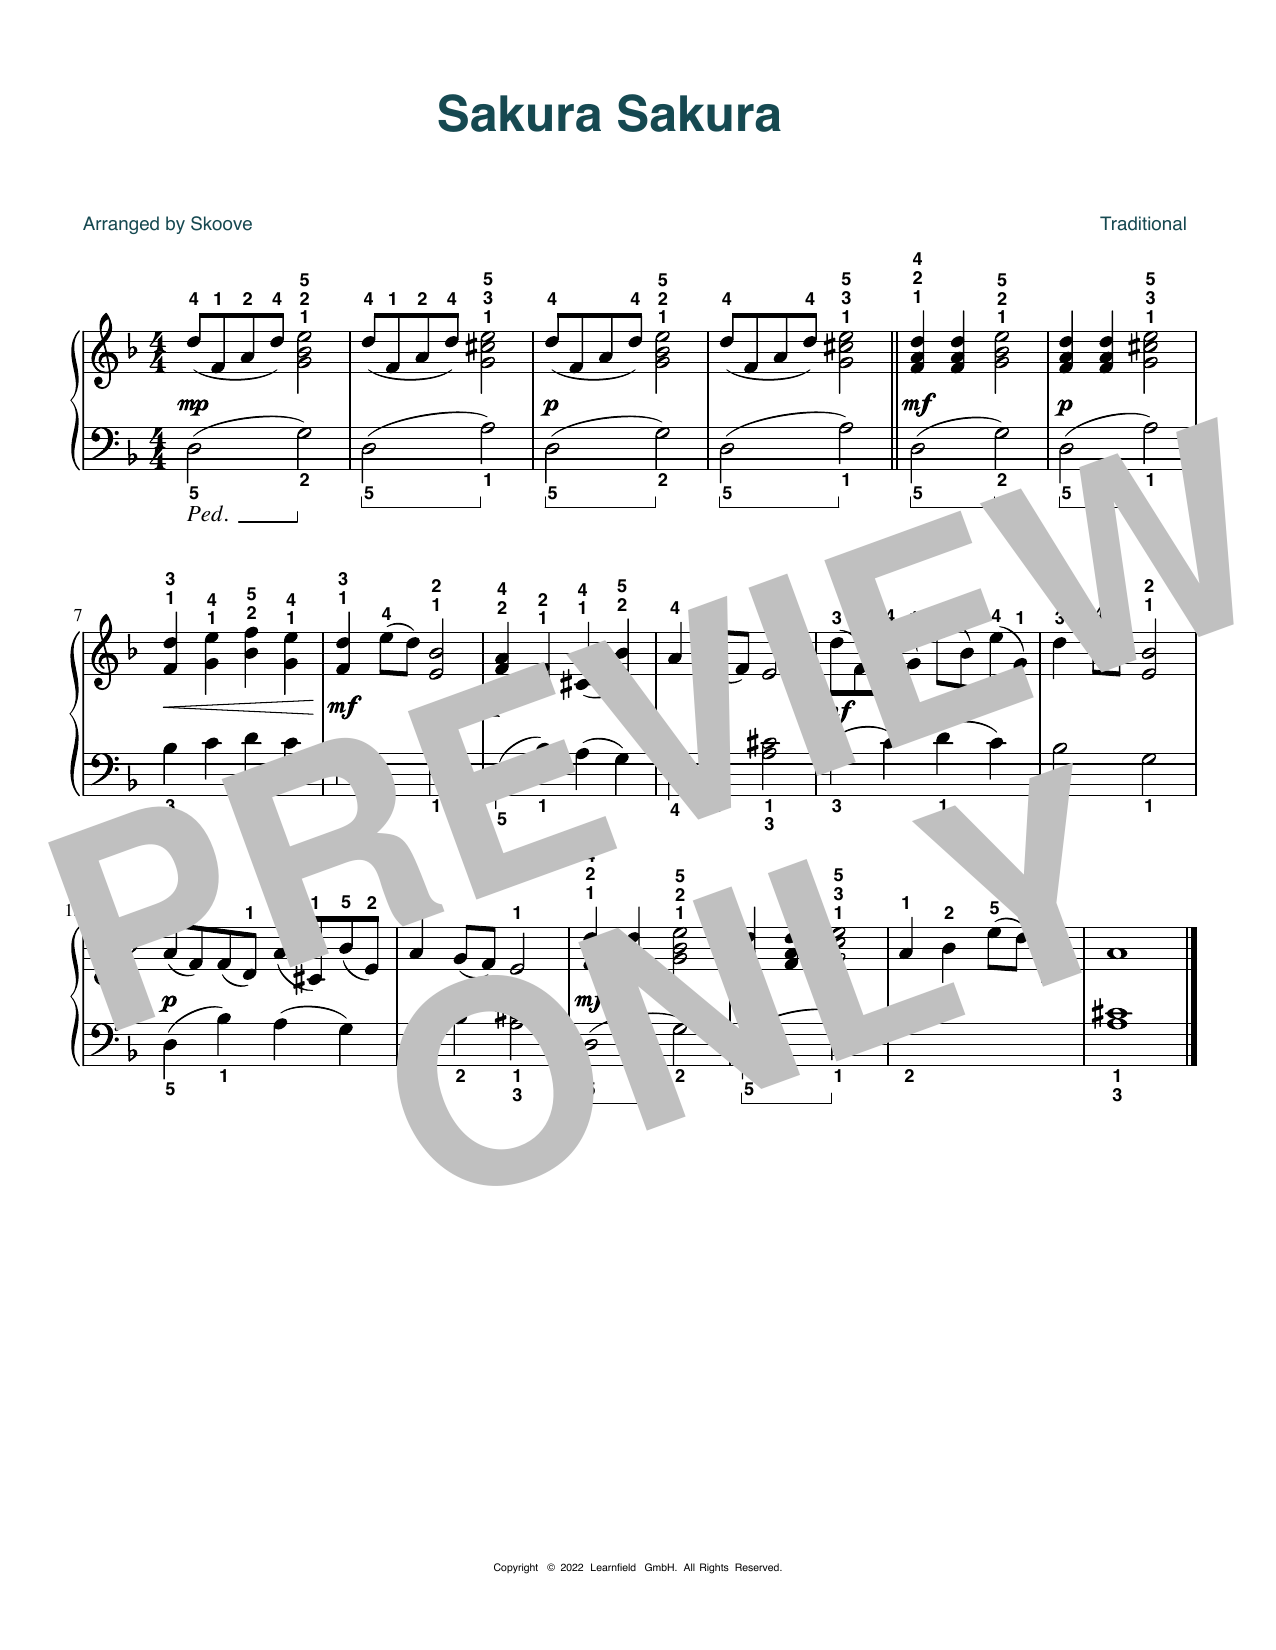 Traditional Sakura Sakura (arr. Skoove) Sheet Music Notes & Chords for Piano Solo - Download or Print PDF